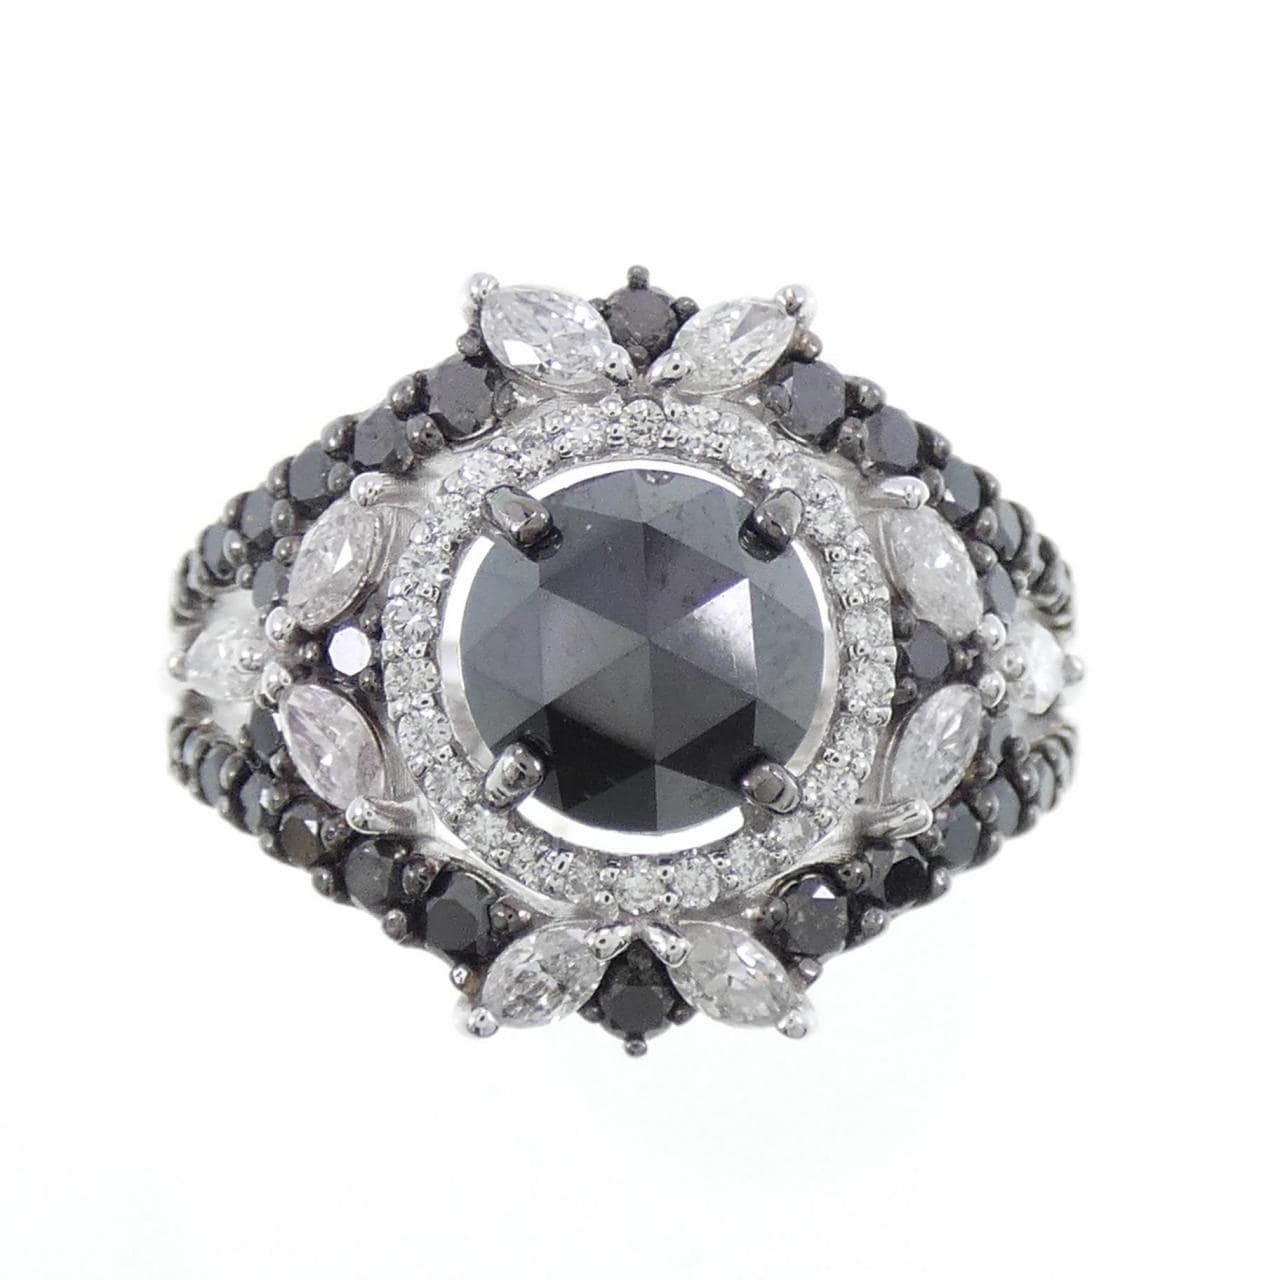 K18WG/K18BG Diamond ring 3.24CT